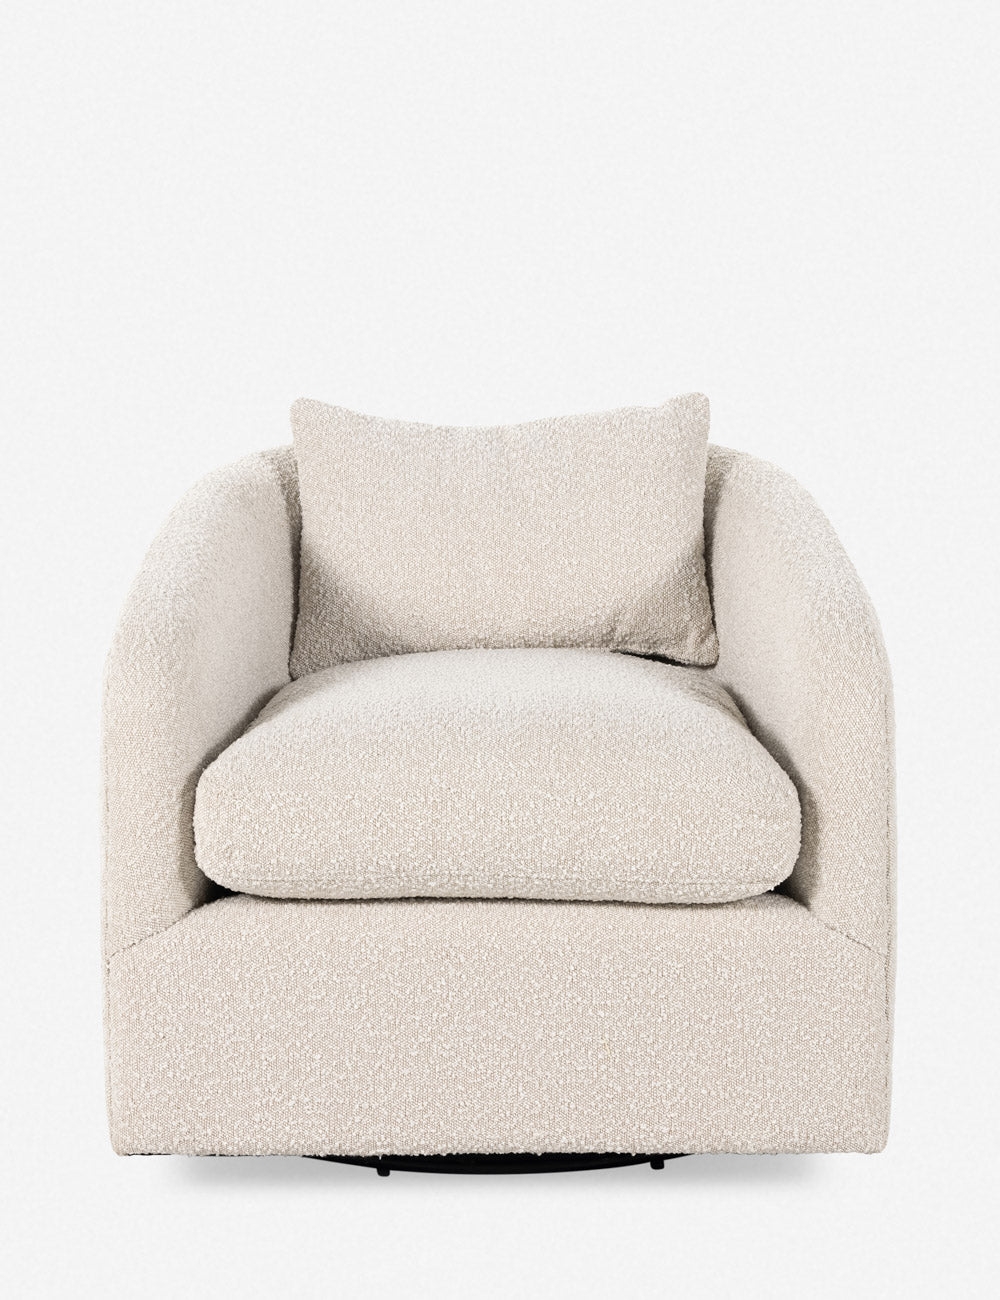 Ren Swivel Chair - Image 0